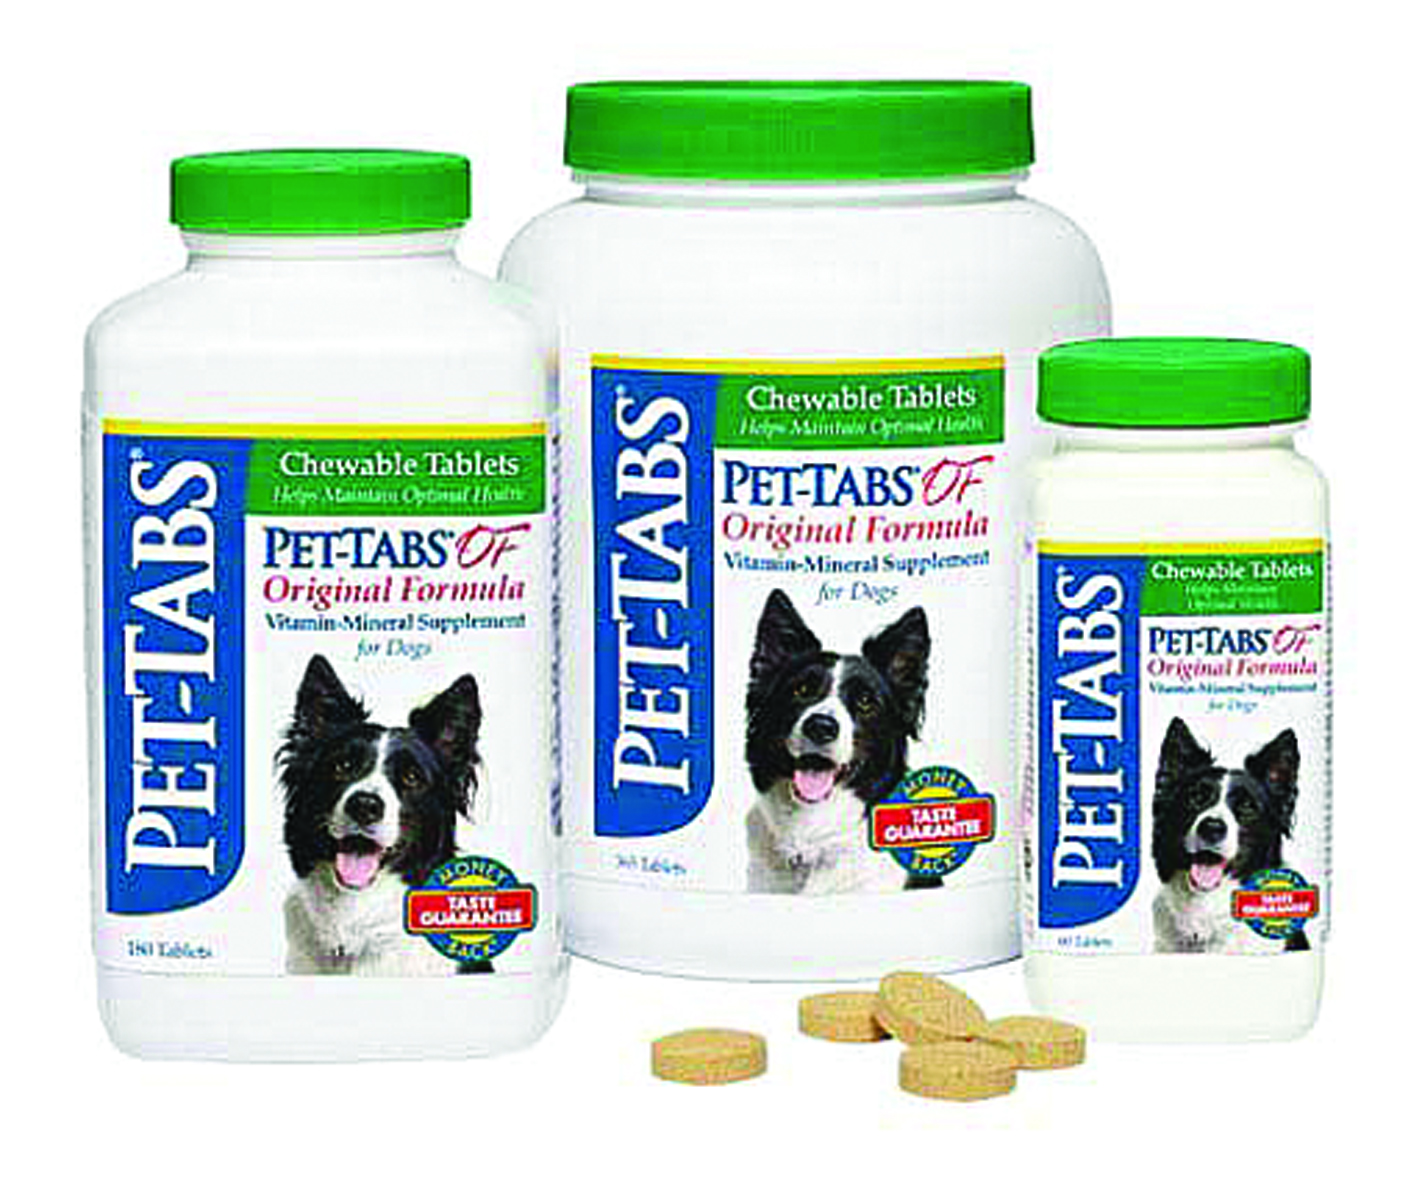 Pet-Tabs Vitamins & Supplements - 60 Tablets